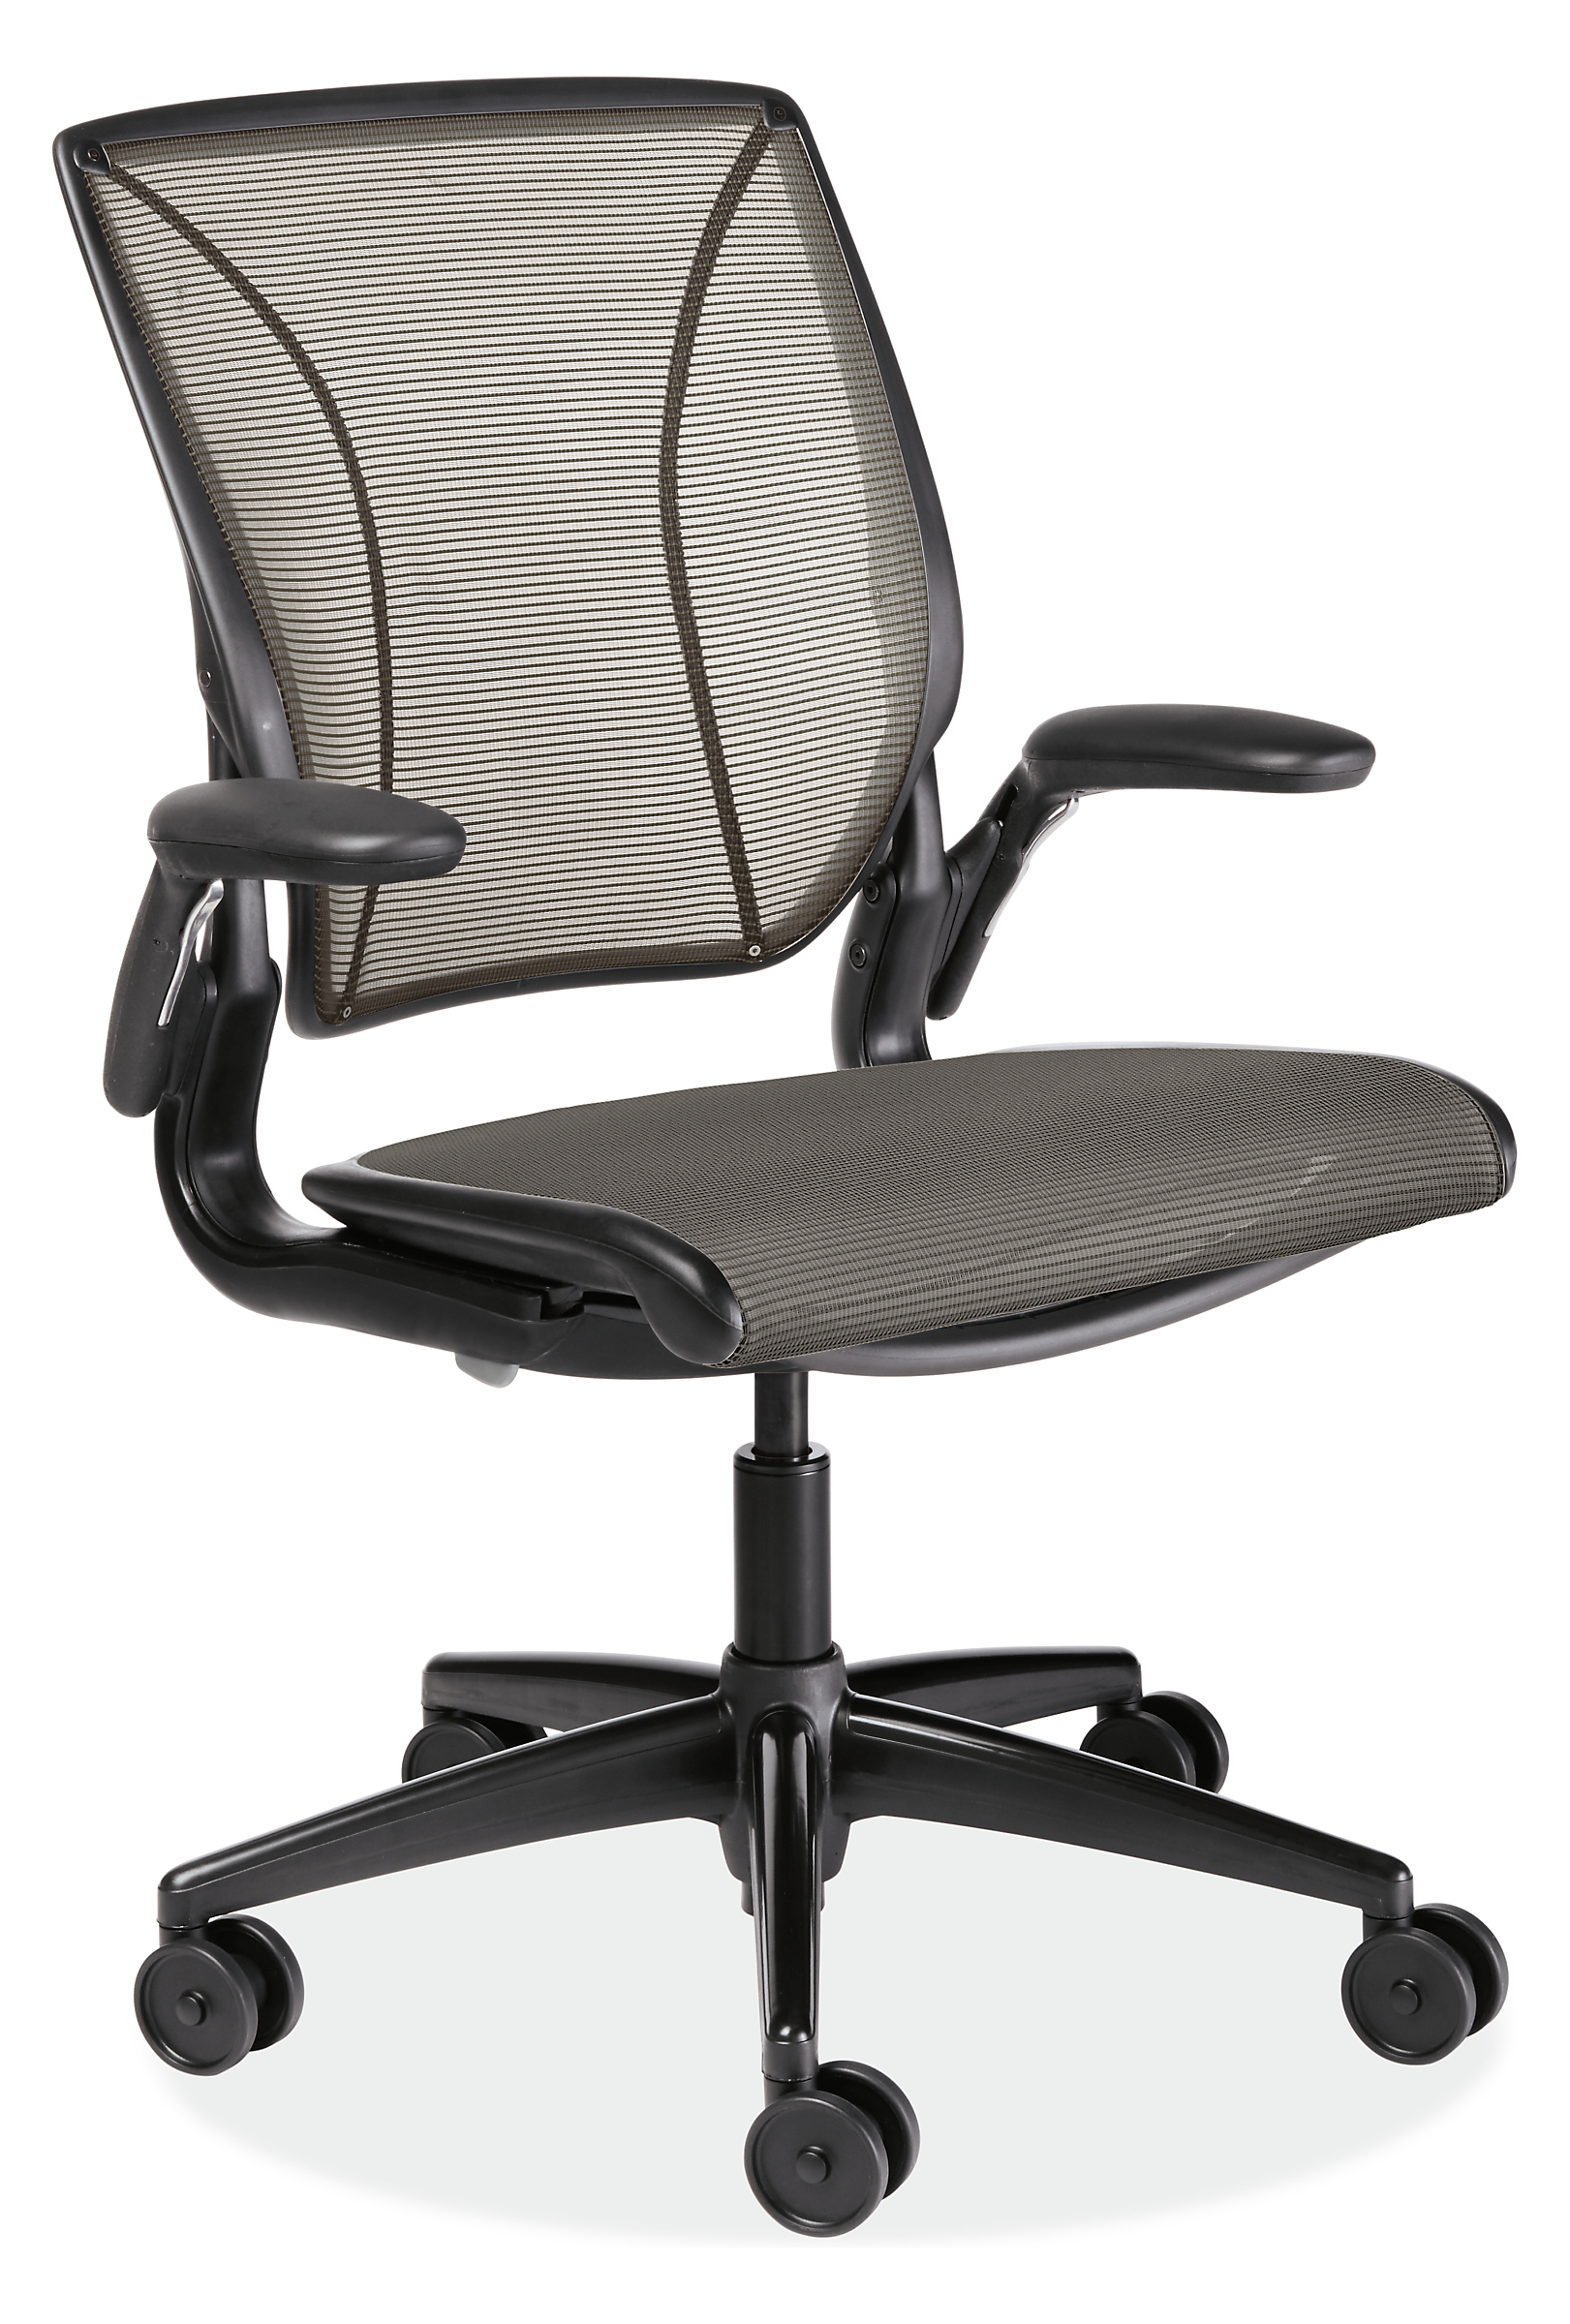 Diffrient World® Adjustable Arm Office Chair